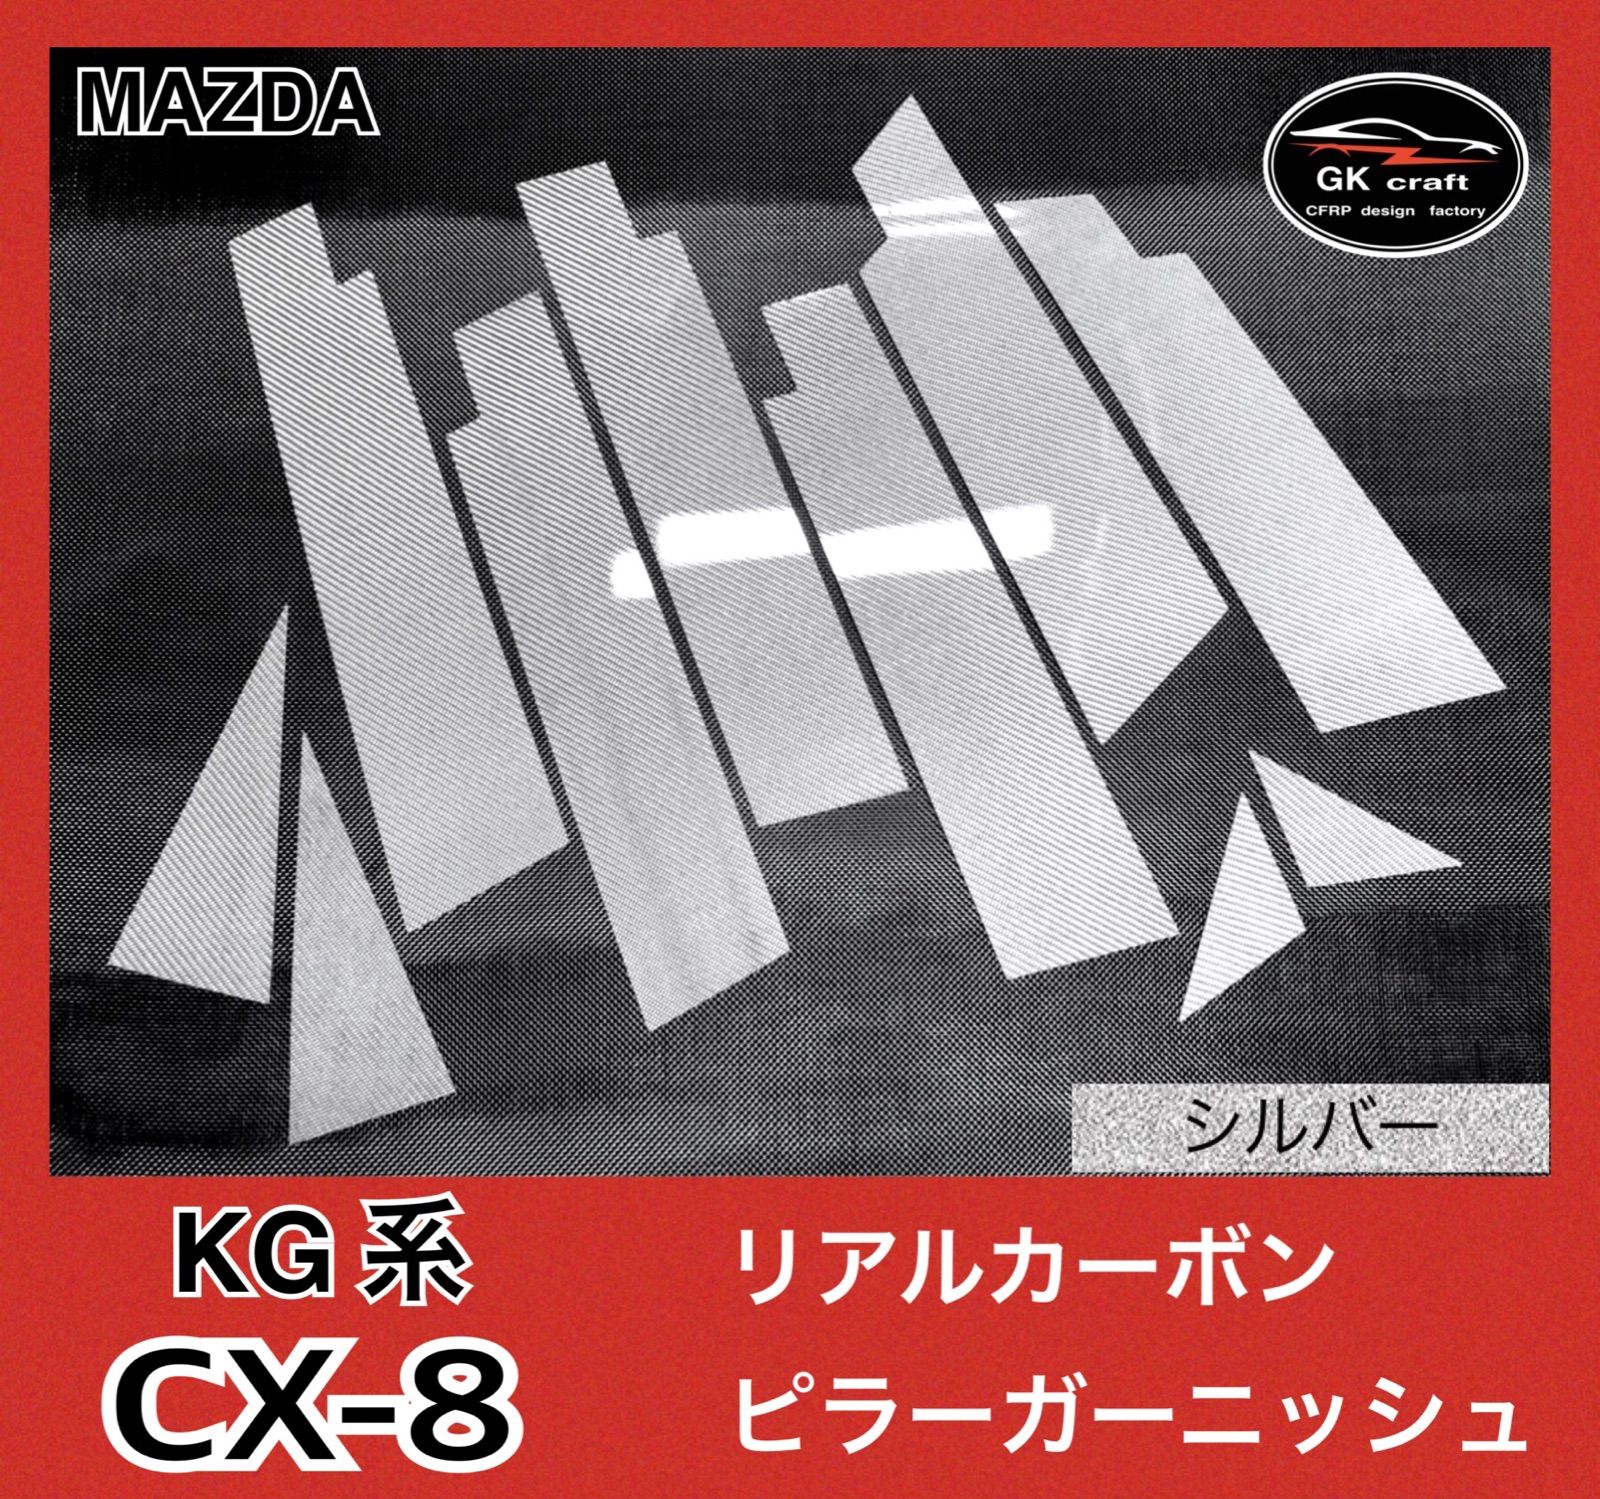 KG系 CX-8【本物フォージドカーボン】ピラーガーニッシュ